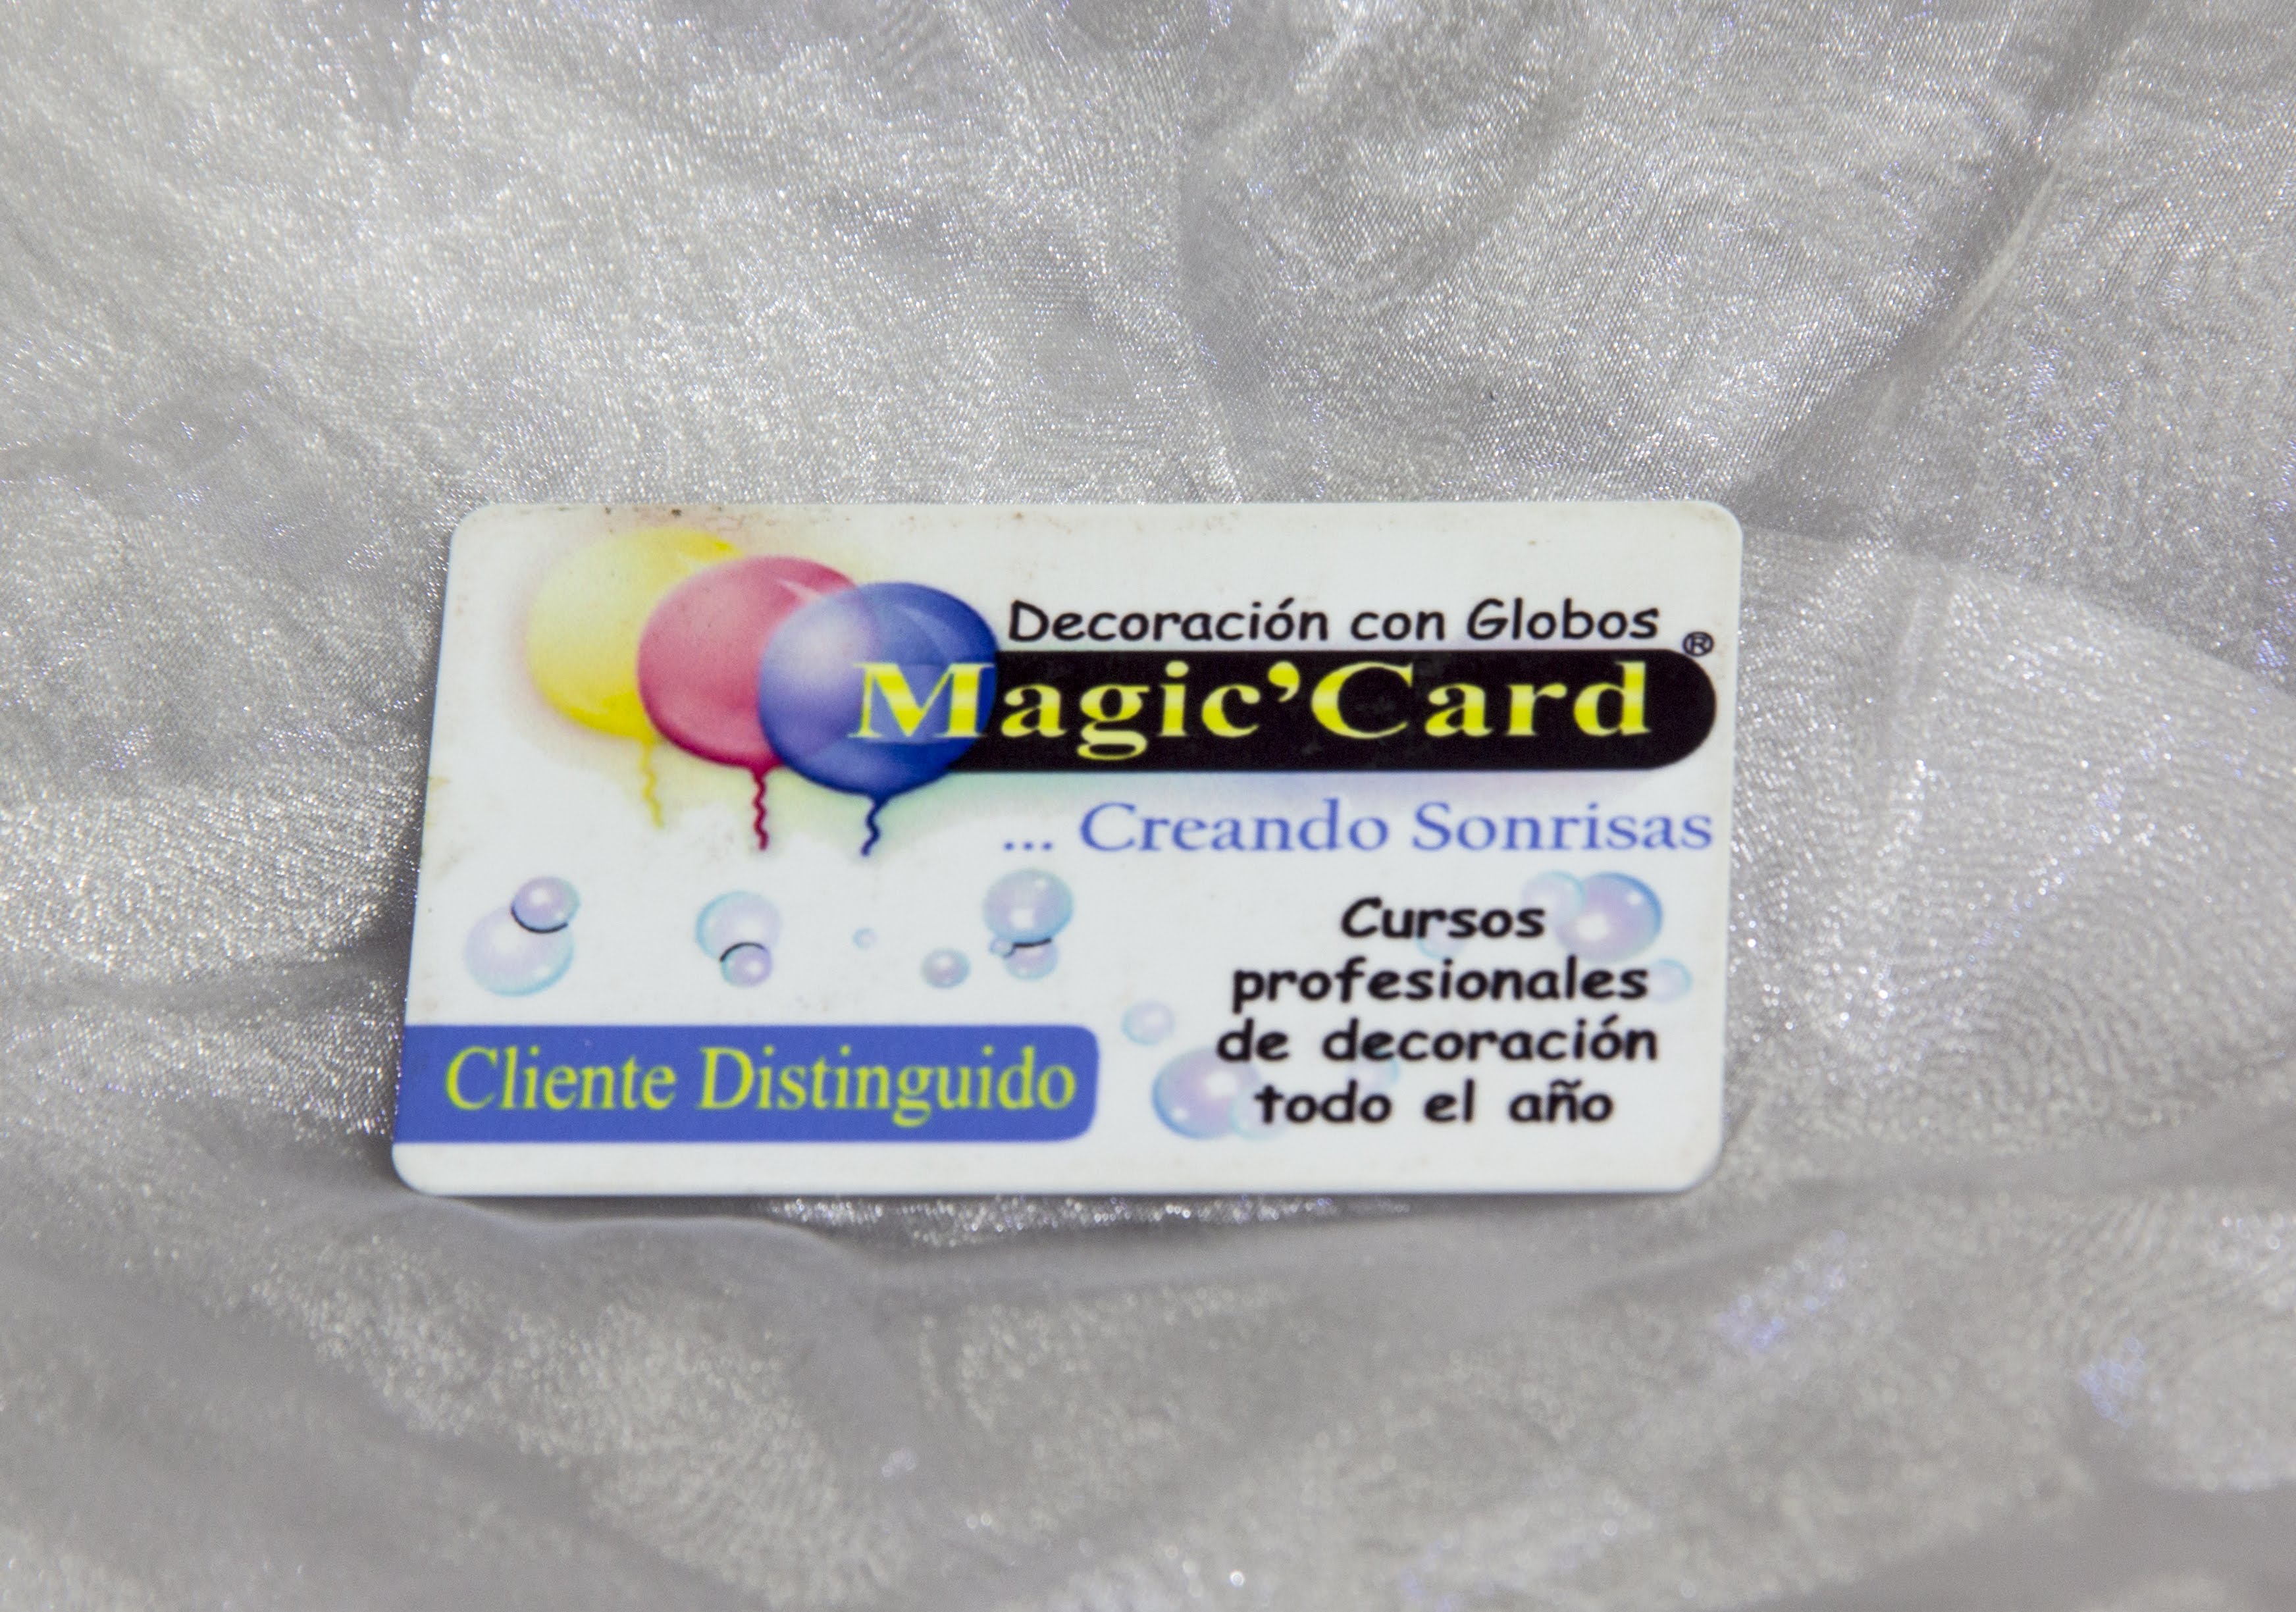 35globomagic magic card